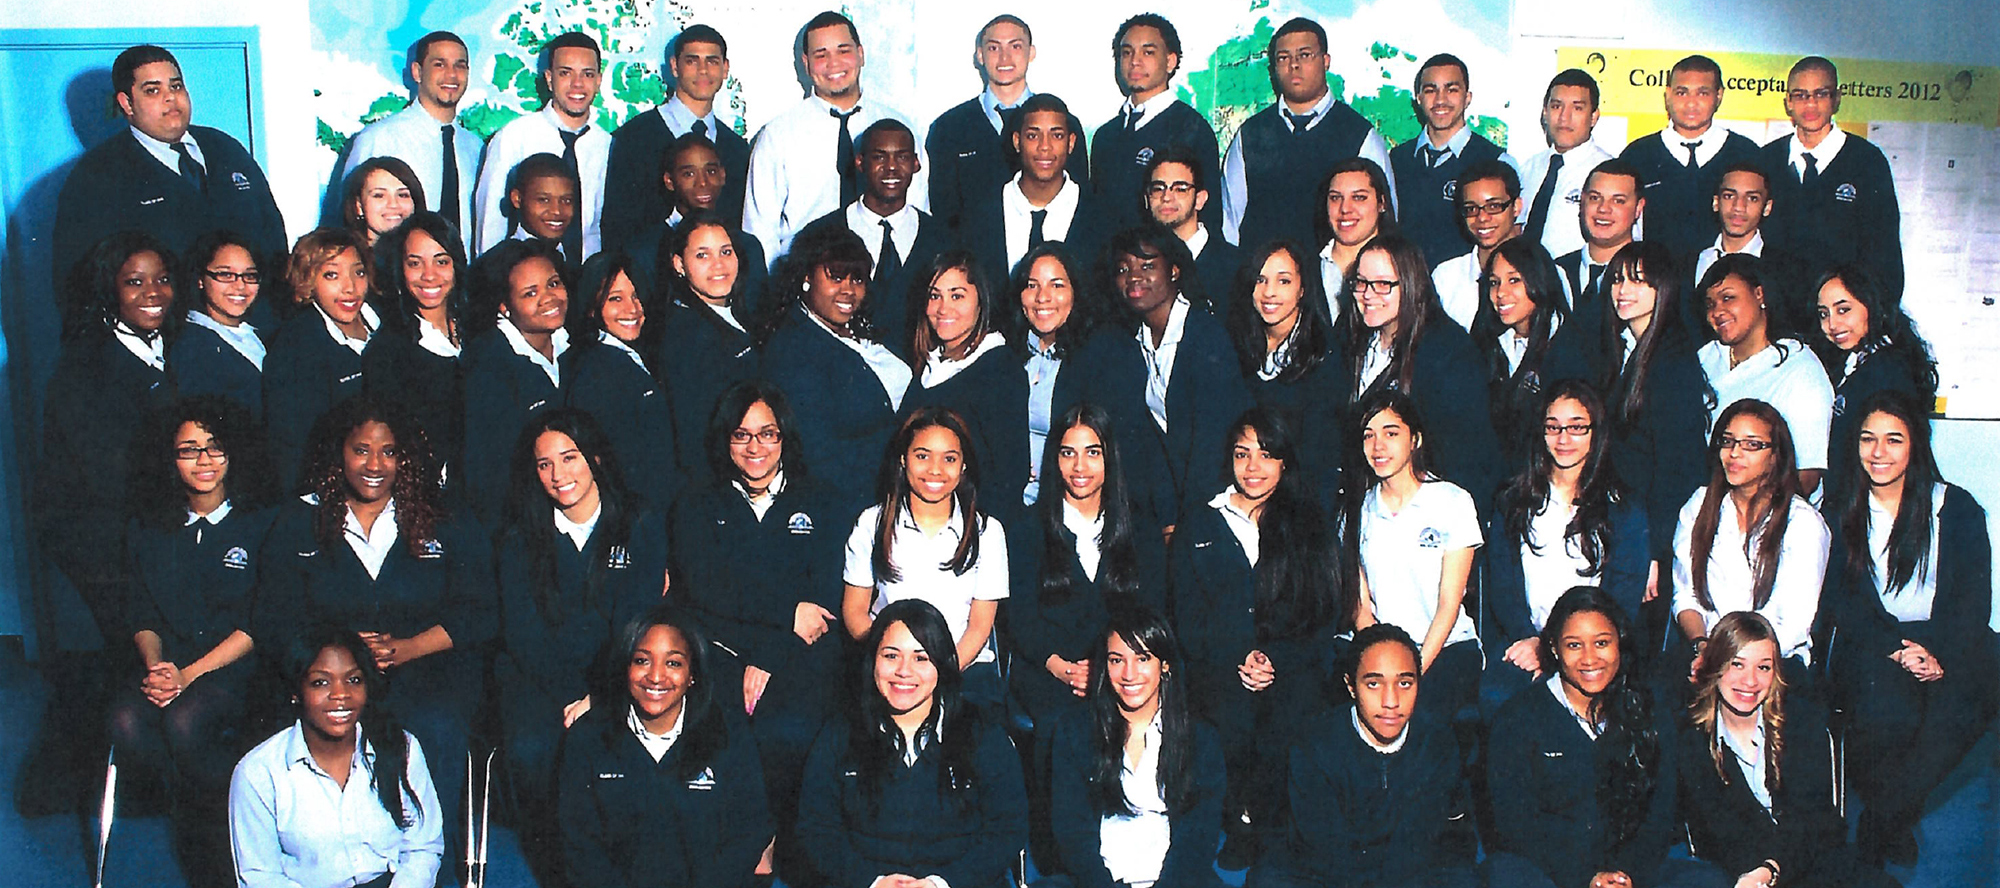 Photo International Leadership Charter High School Class of 2012